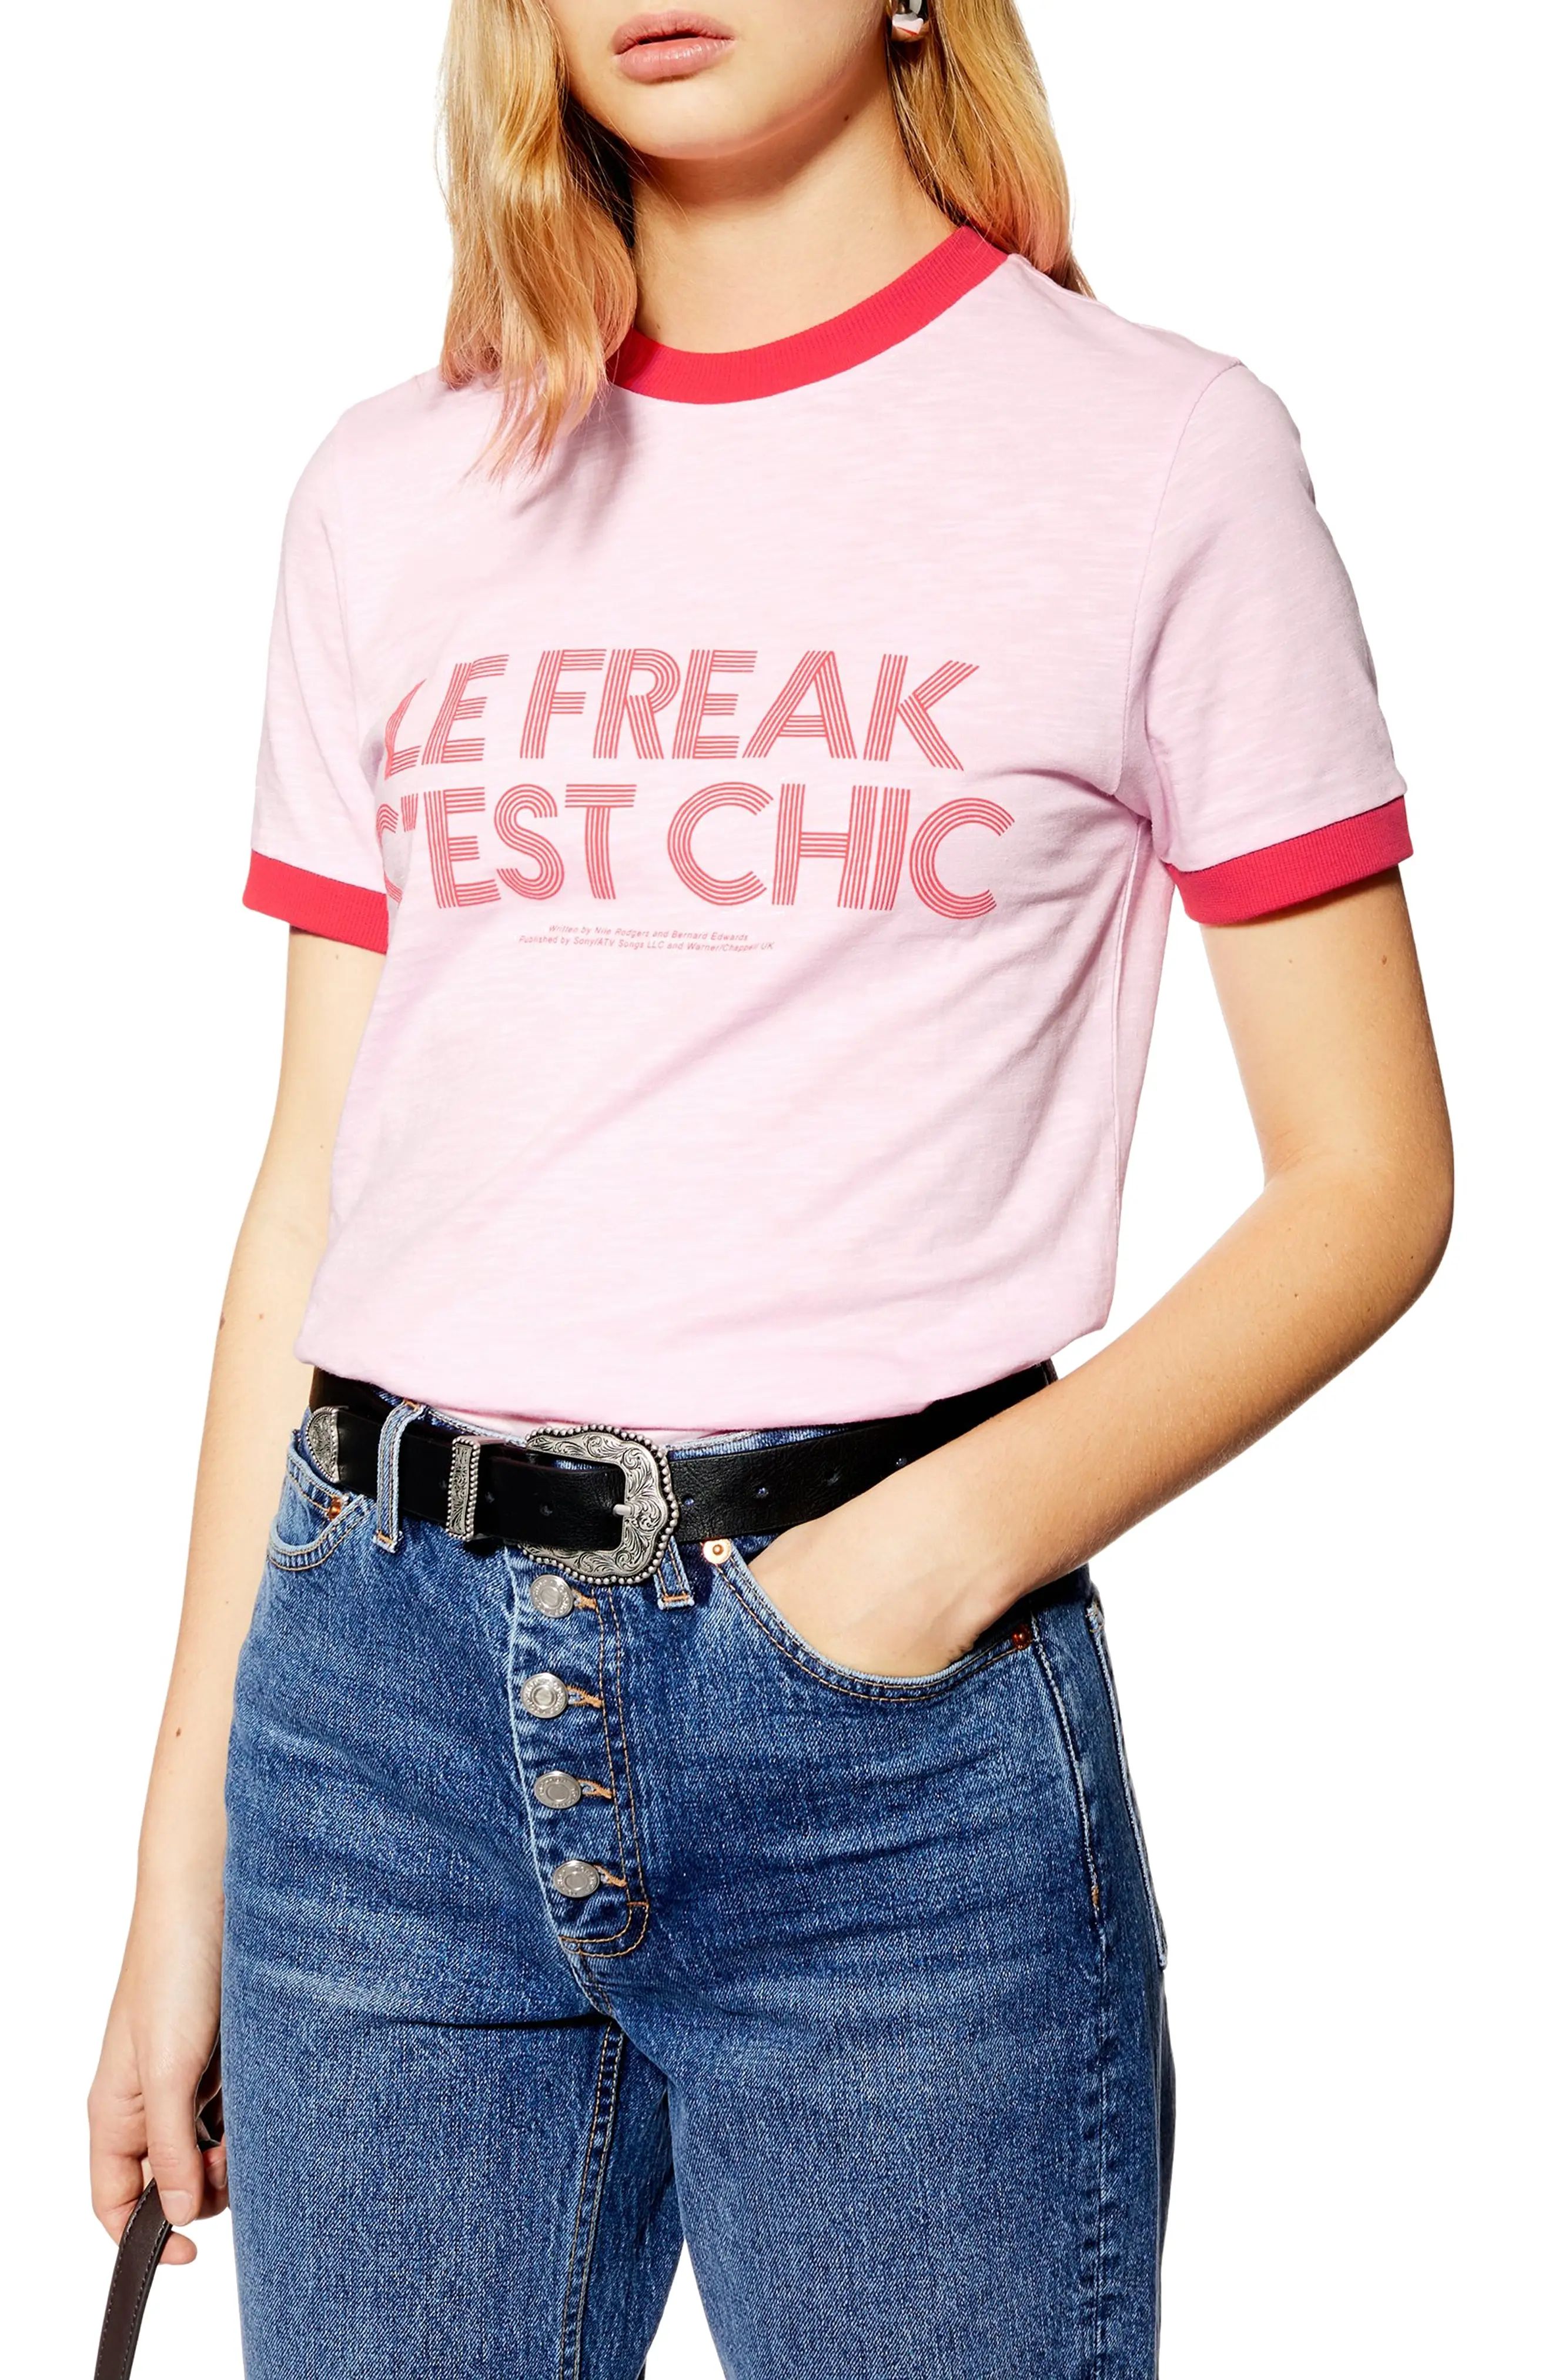 Le Freak C'Est Chic Tee | Nordstrom